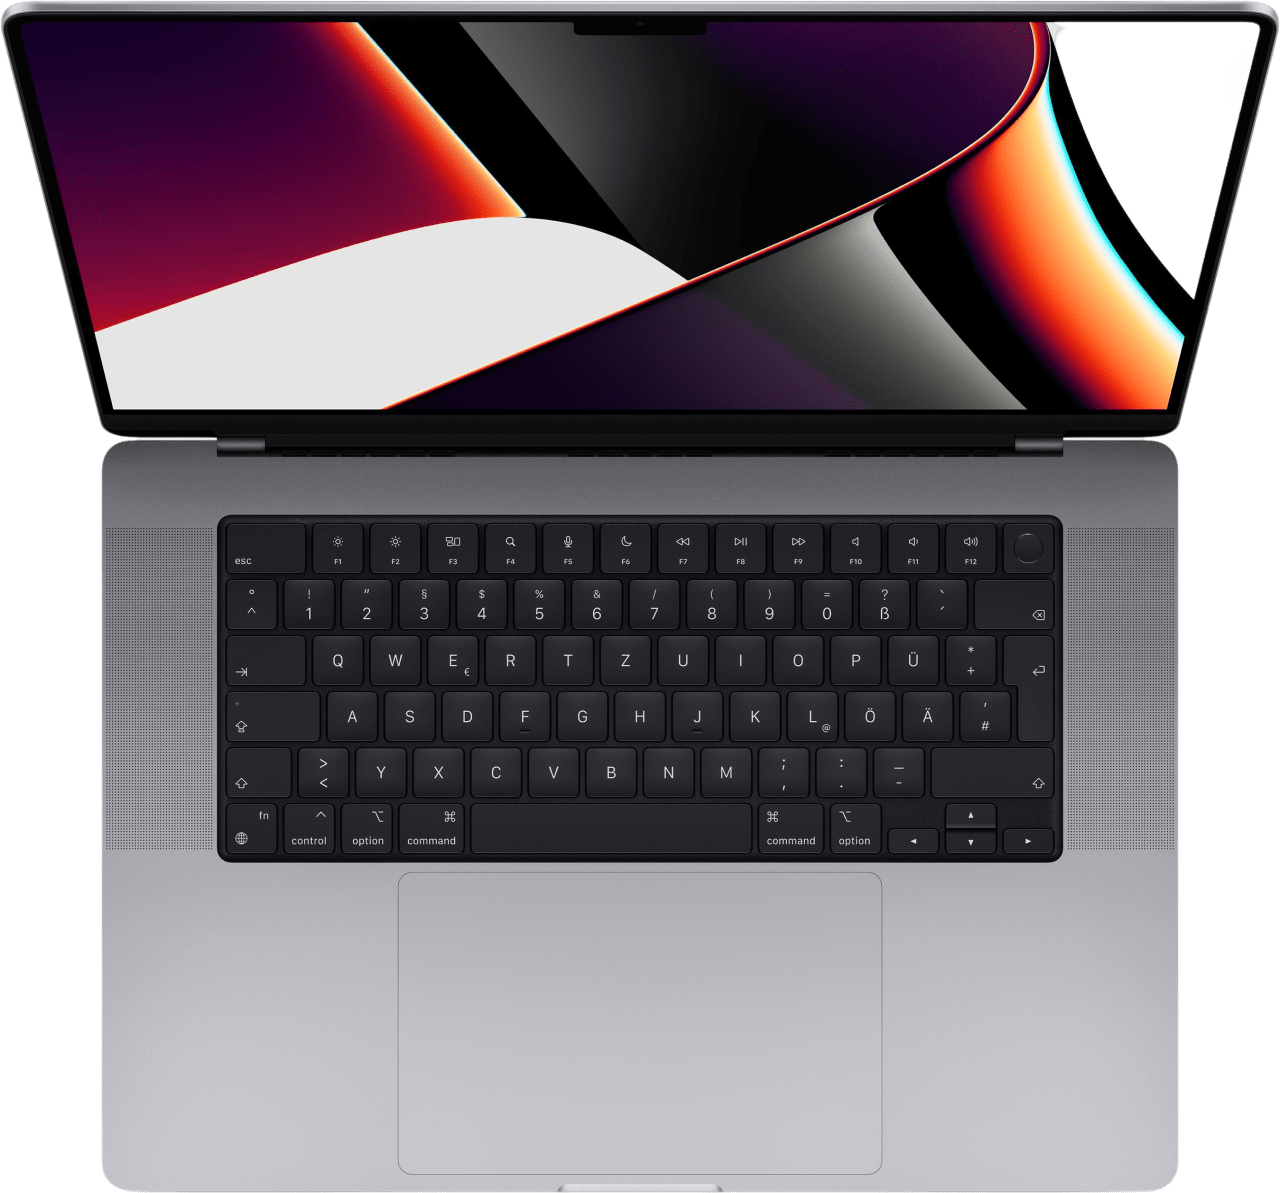 Weltraum grau MacBook Pro 16" Laptop - Apple M1 Pro chip - 16GB Memory - 512GB SSD (Latest Model).2